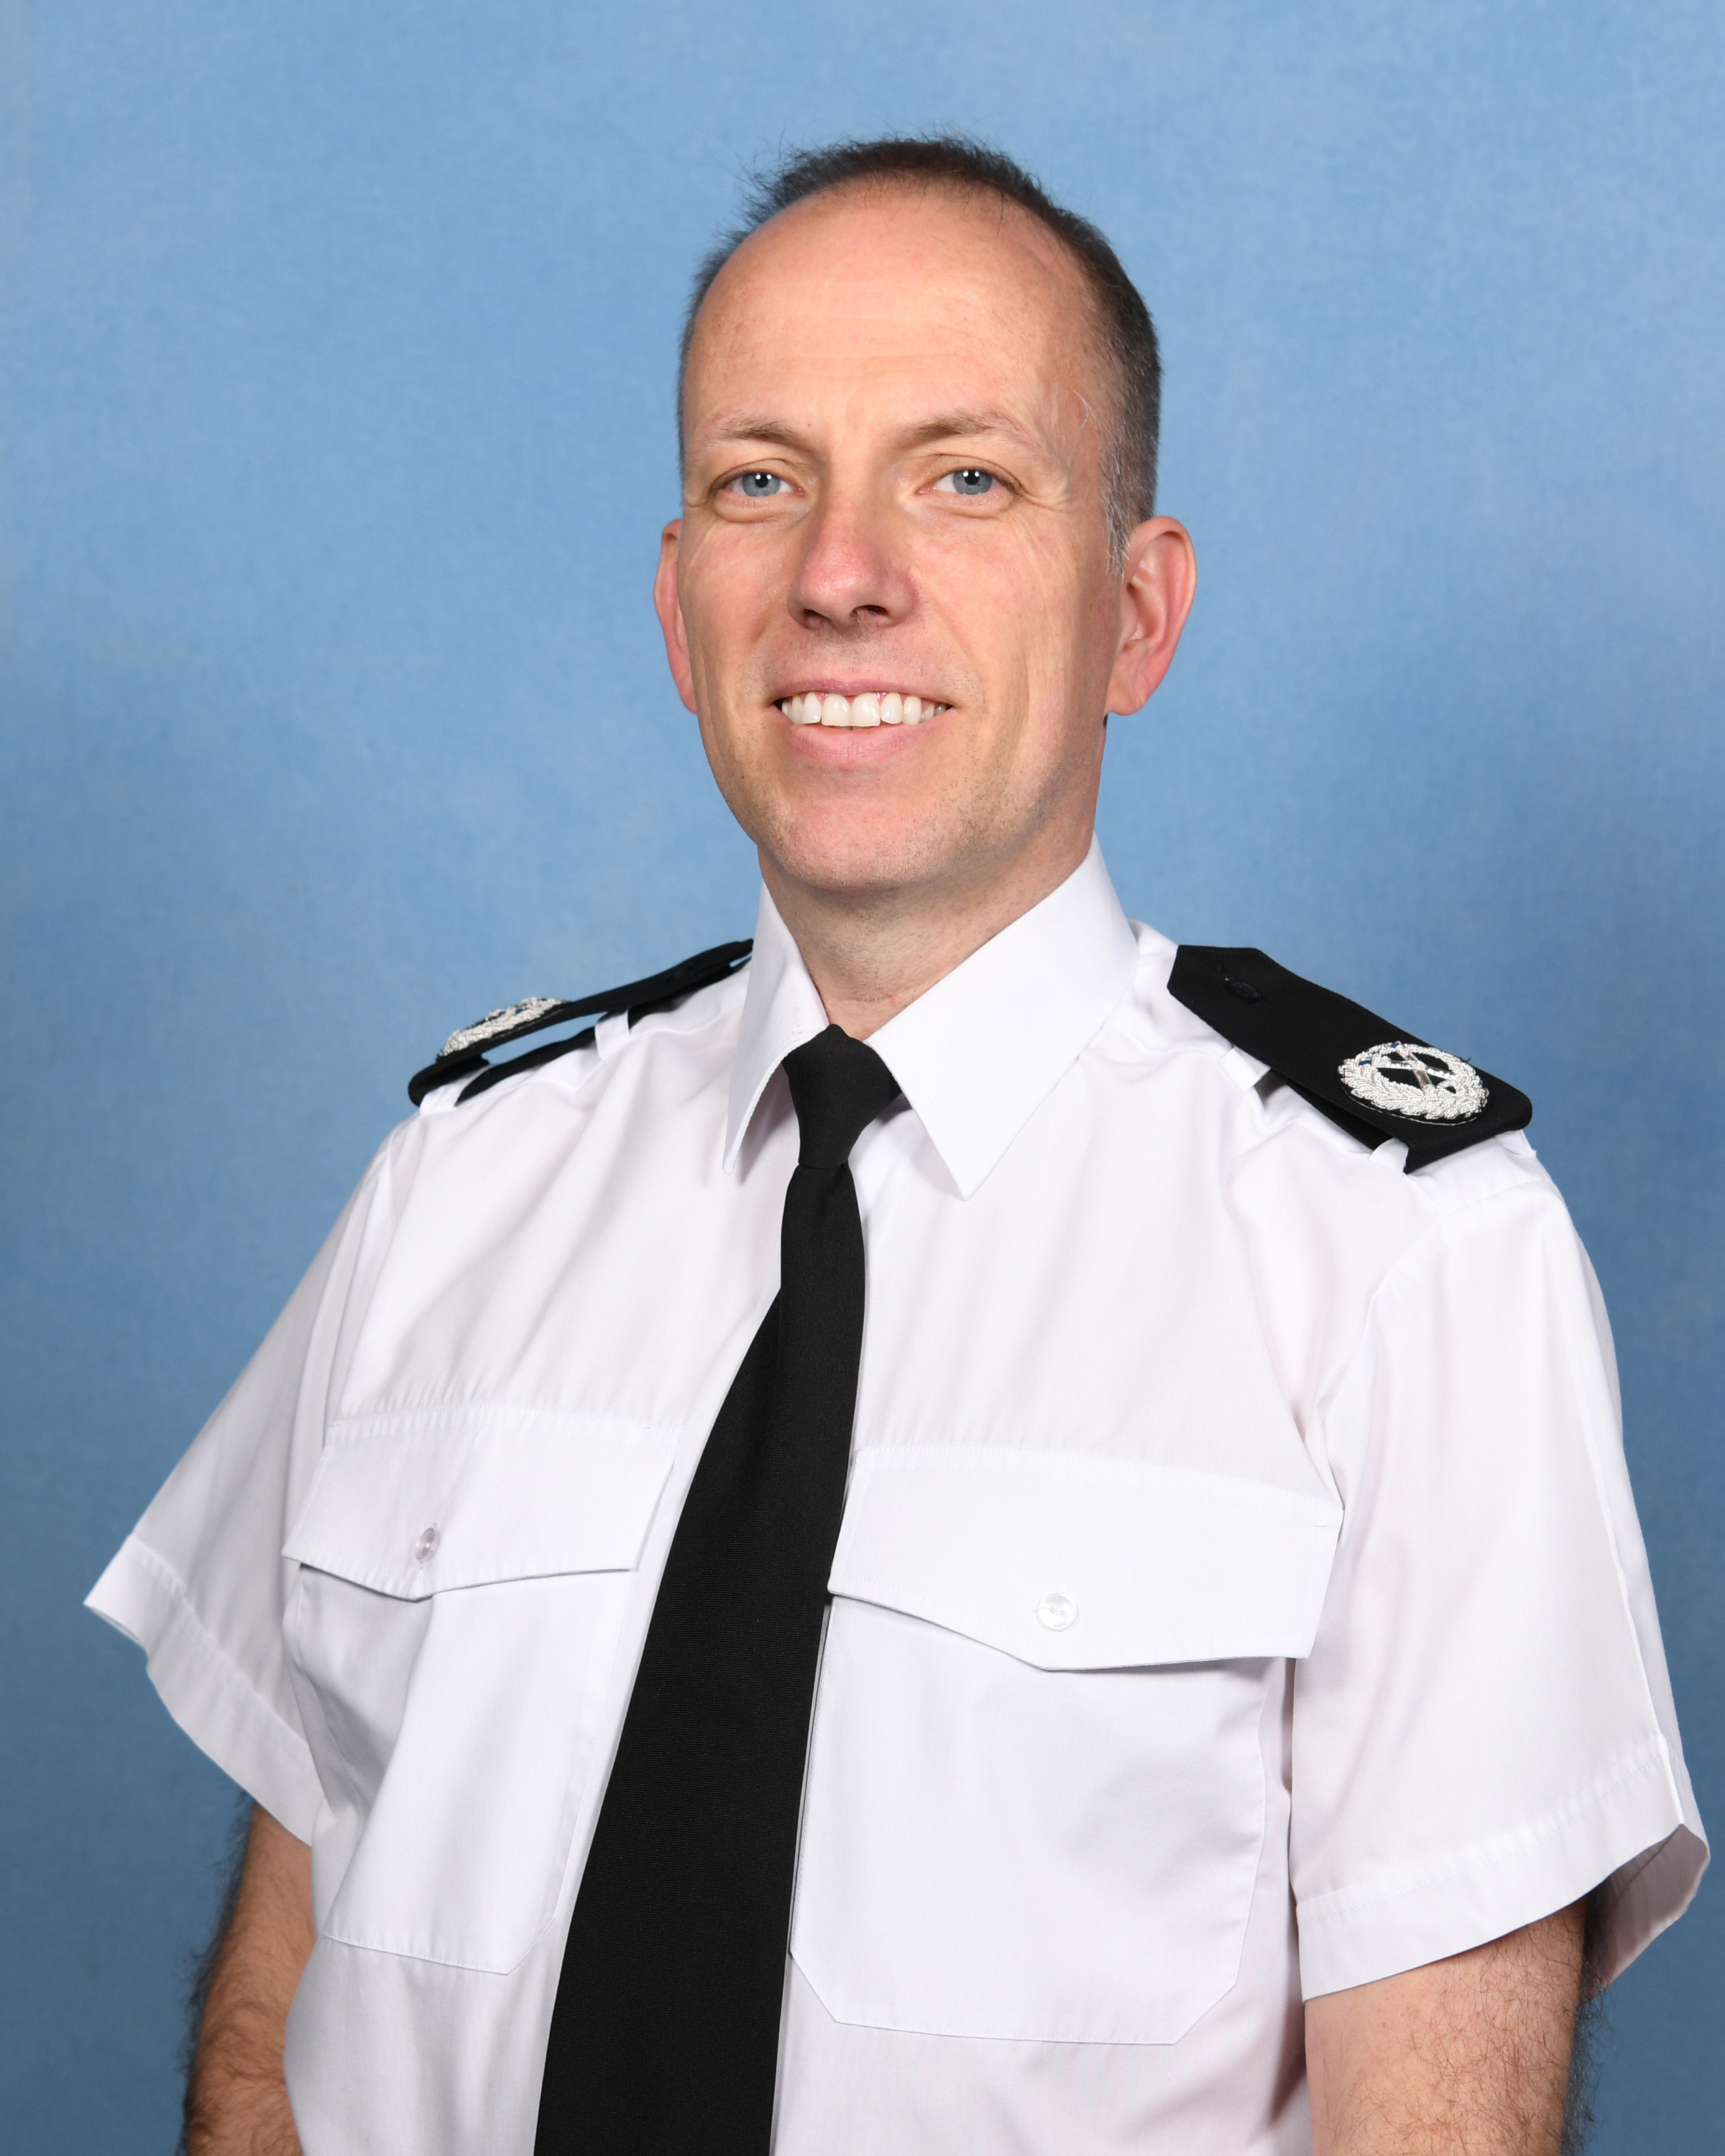 A man smiling, wearing Police uniform